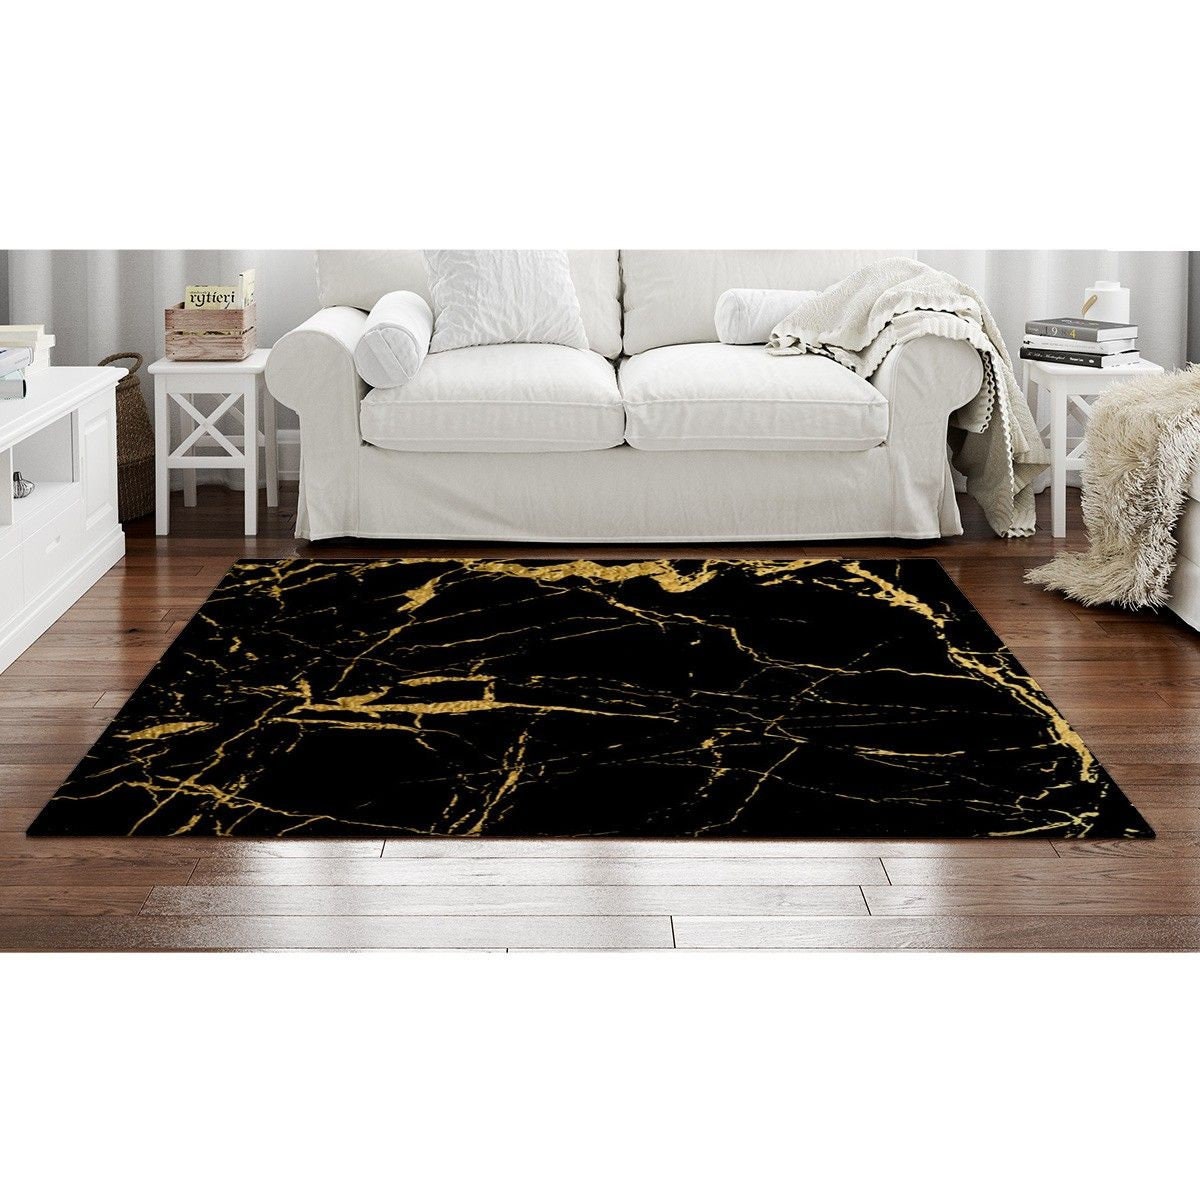 Floor Rug Mat Bedroom Carpet African Black Beauty Band Living Room Area Rugs 